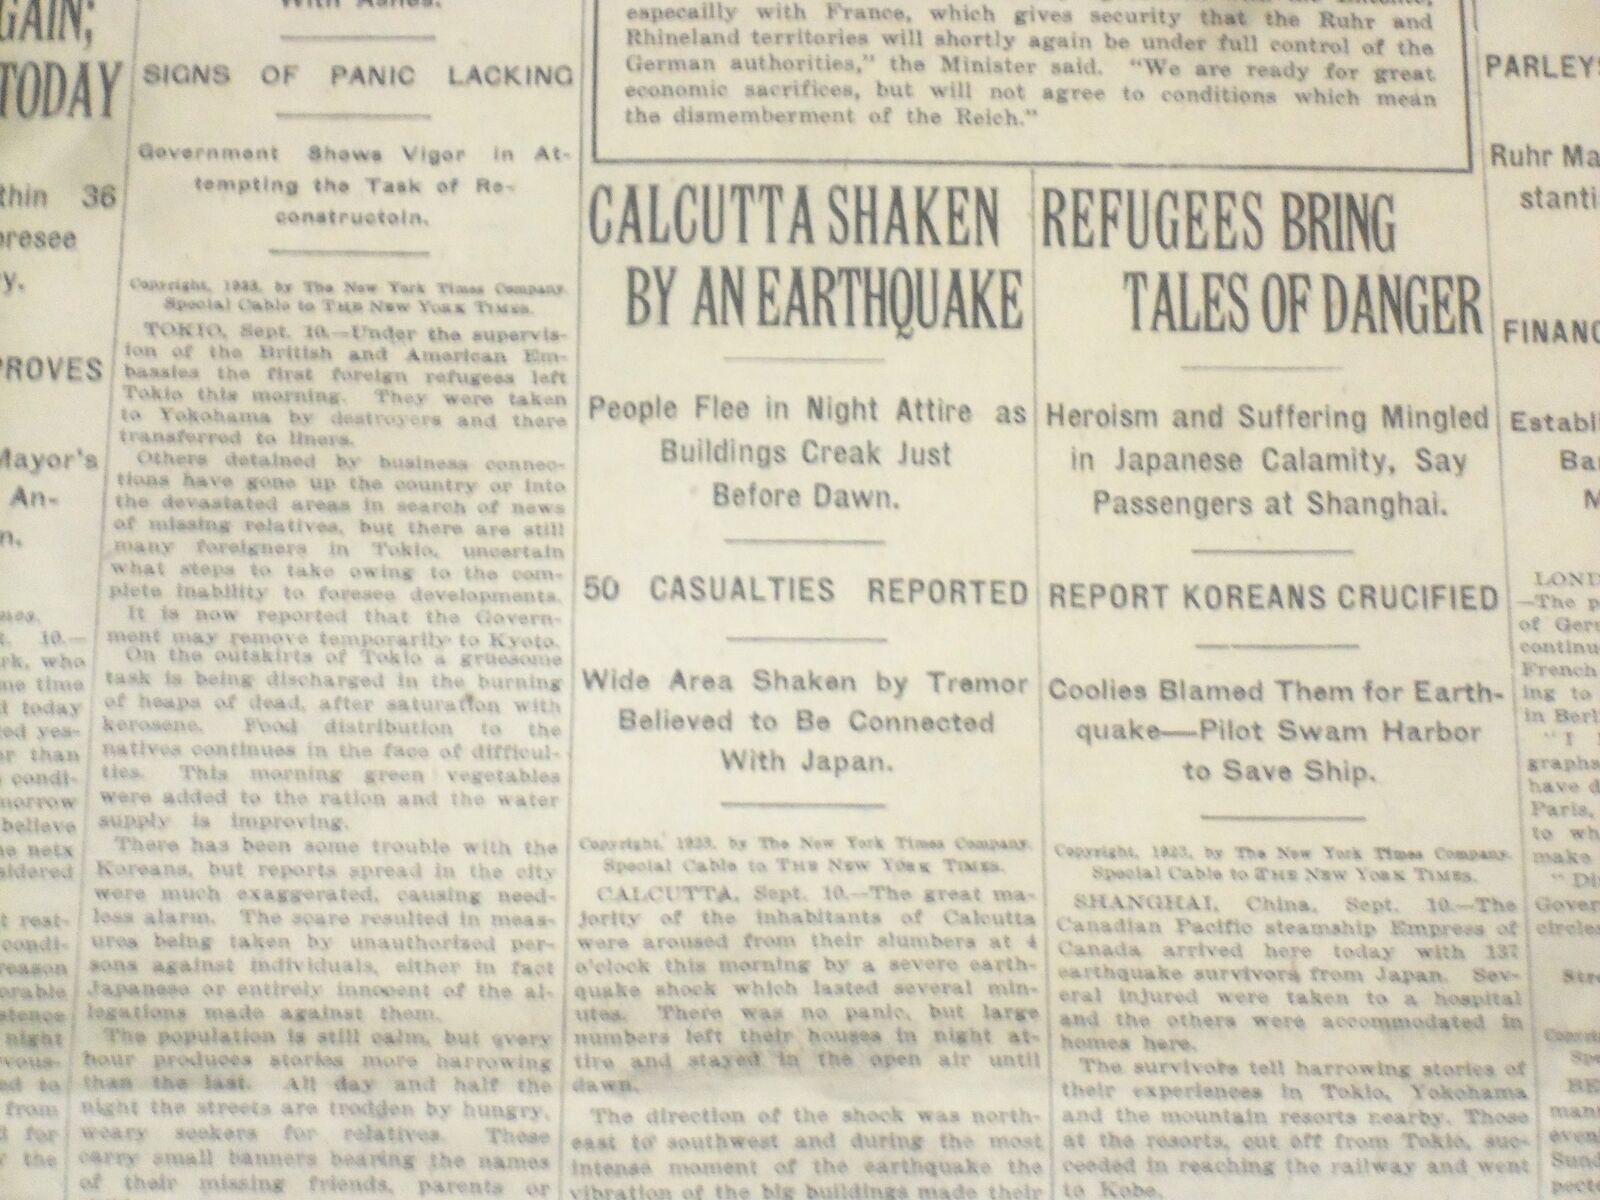 1923 SEP 11 NEW YORK TIMES - CALCUTTA SHAKEN BY EARTHQUAKE - NT 9355